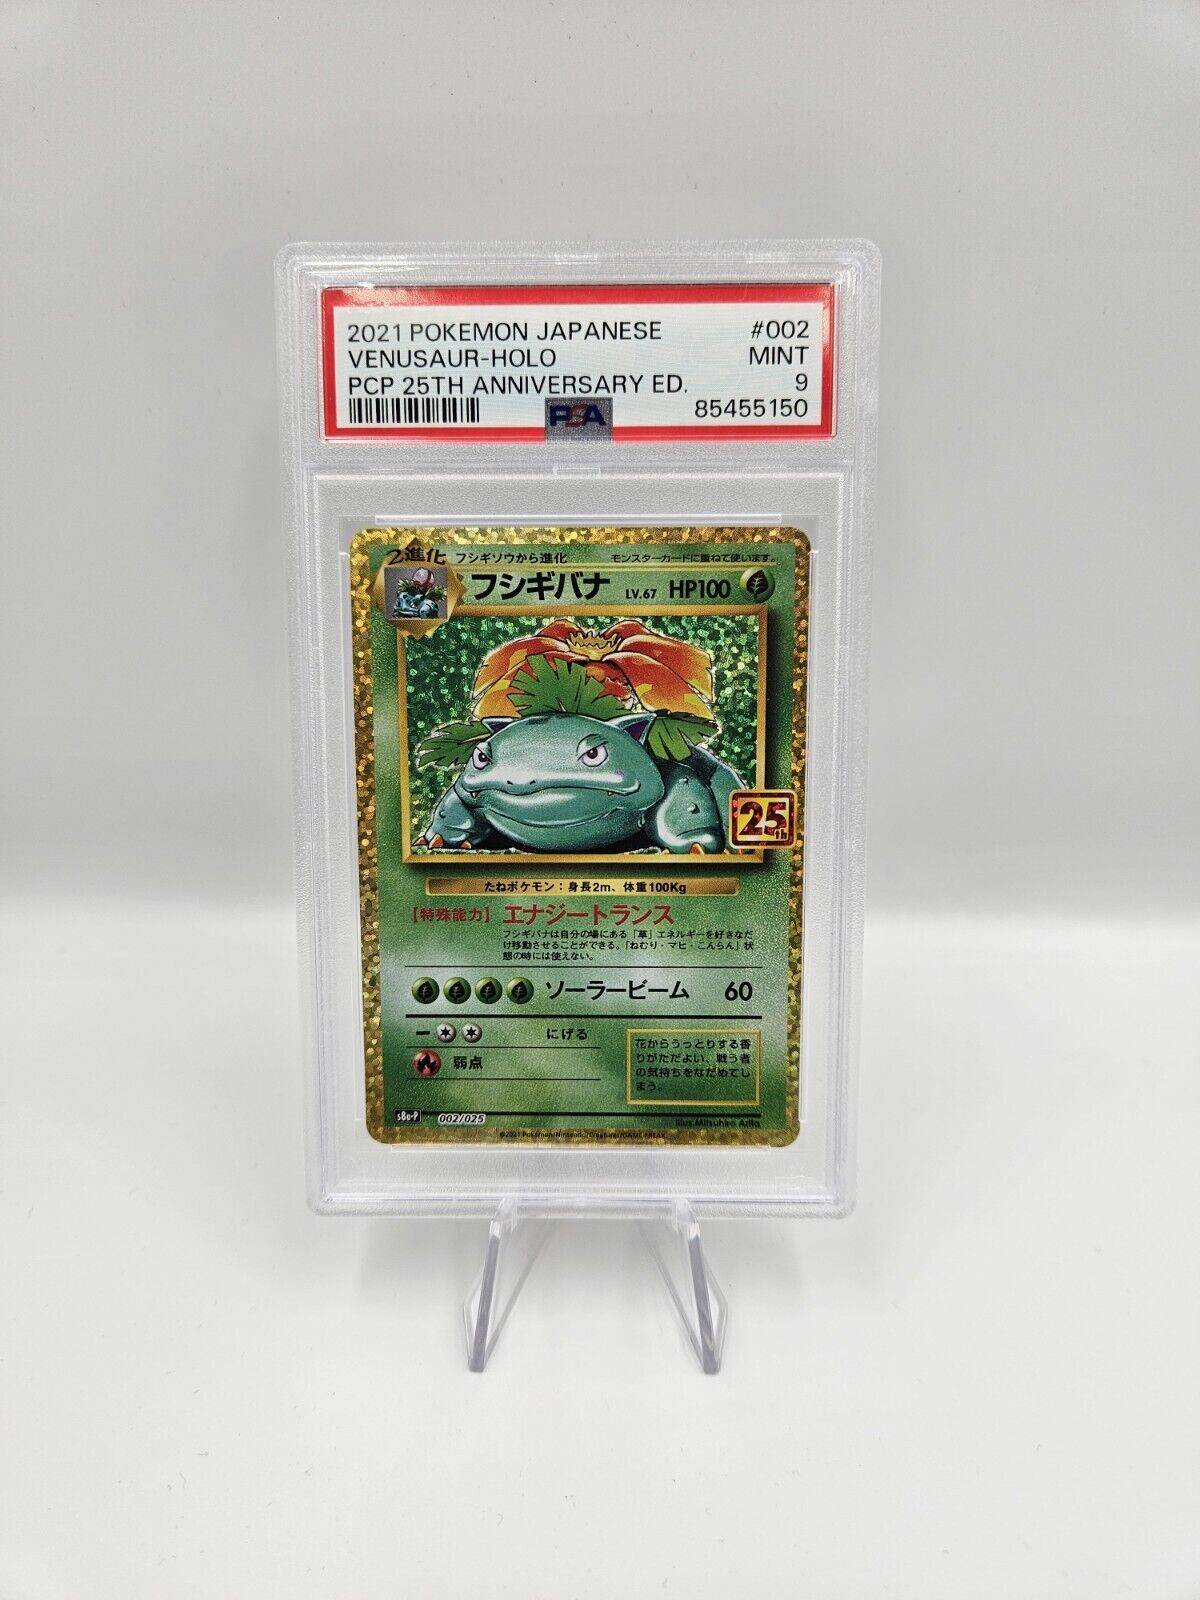 Pokémon Japanese Venusaur Holo 002/025 25th Anniversary PSA 9 Graded